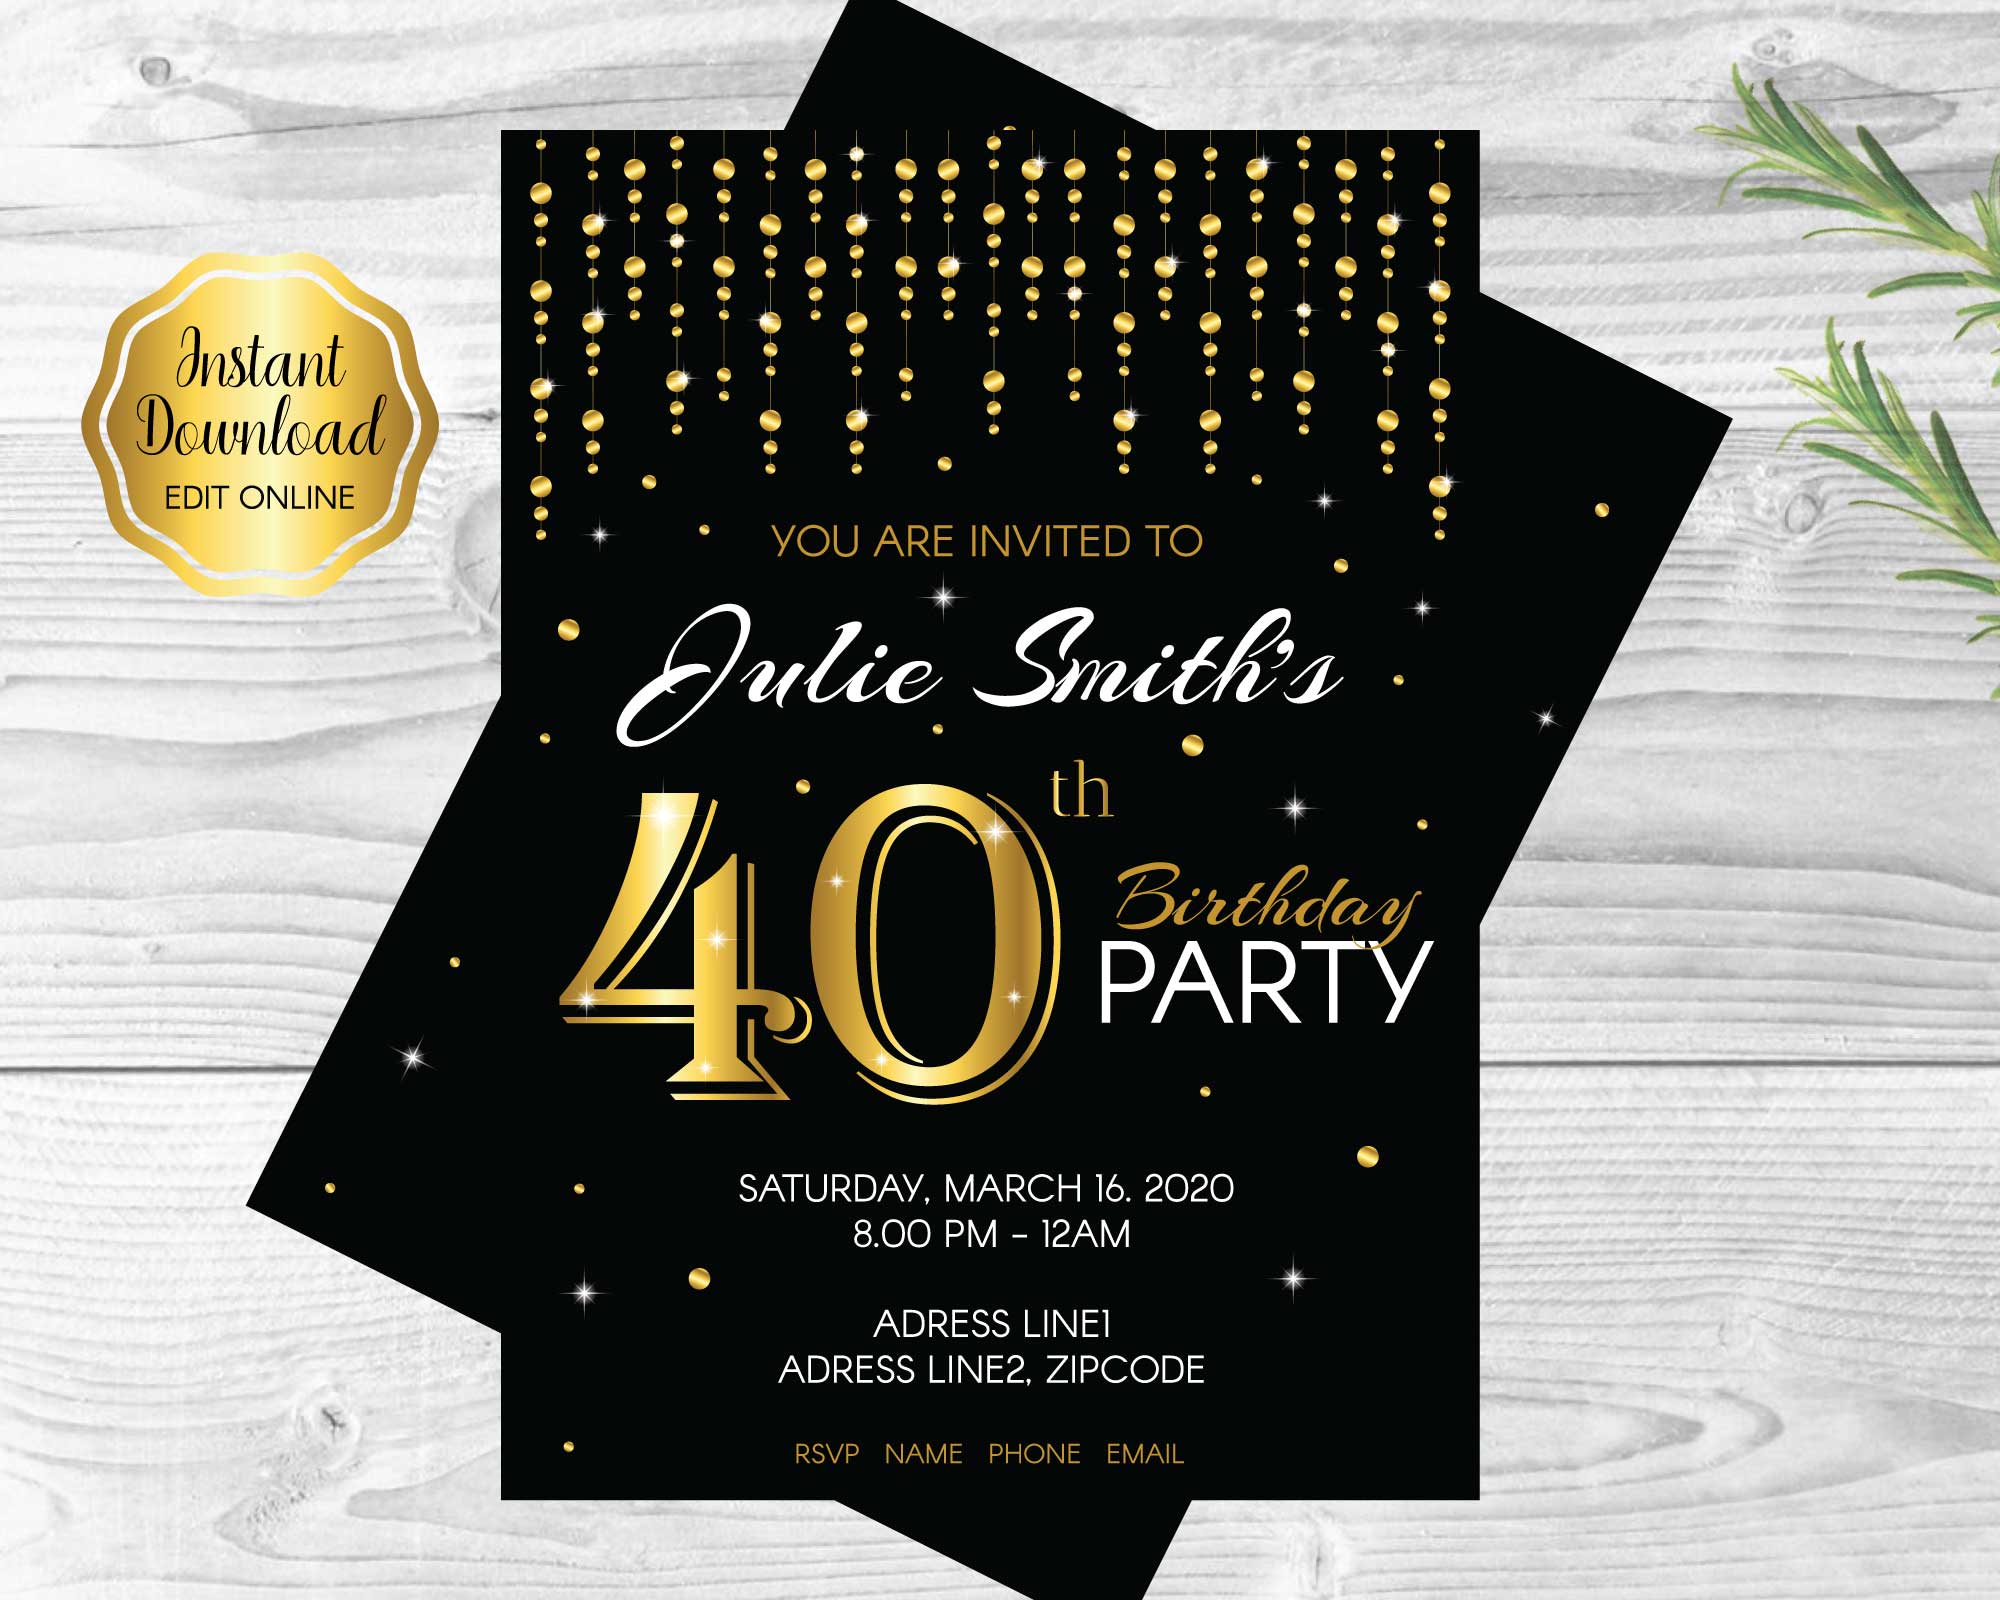 Elasticiteit Middellandse Zee spoel 40th Birthday Party Invitation Classic Design – Funtastic Idea